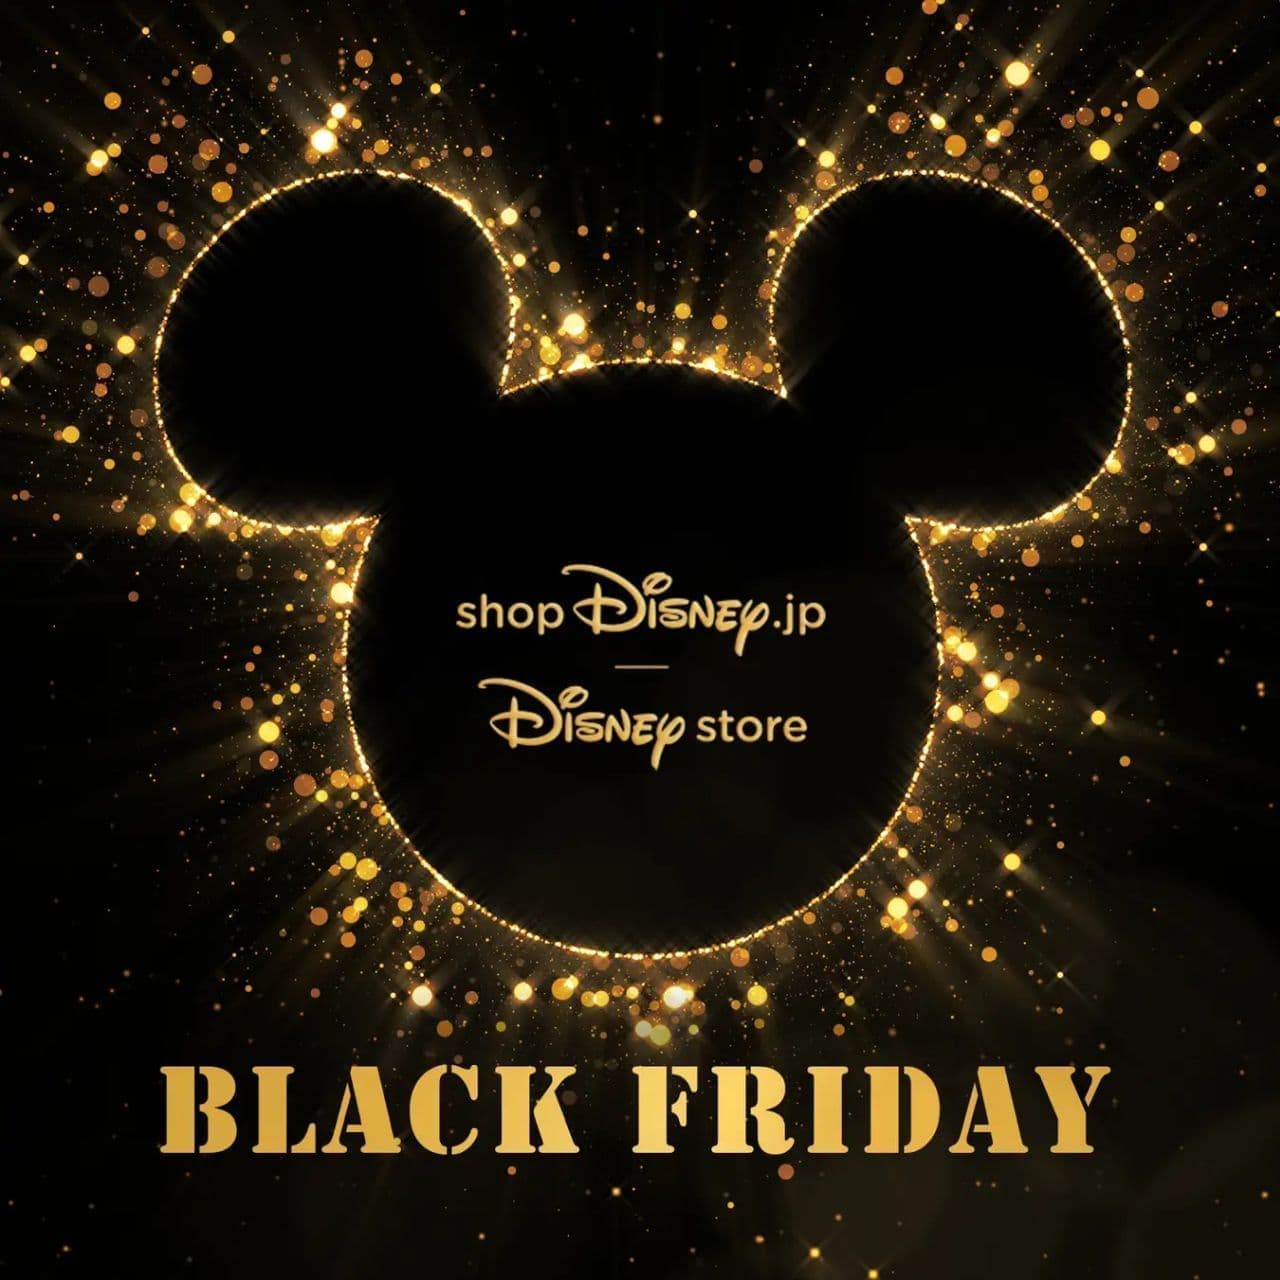 Disney Store "Black Friday Sale"